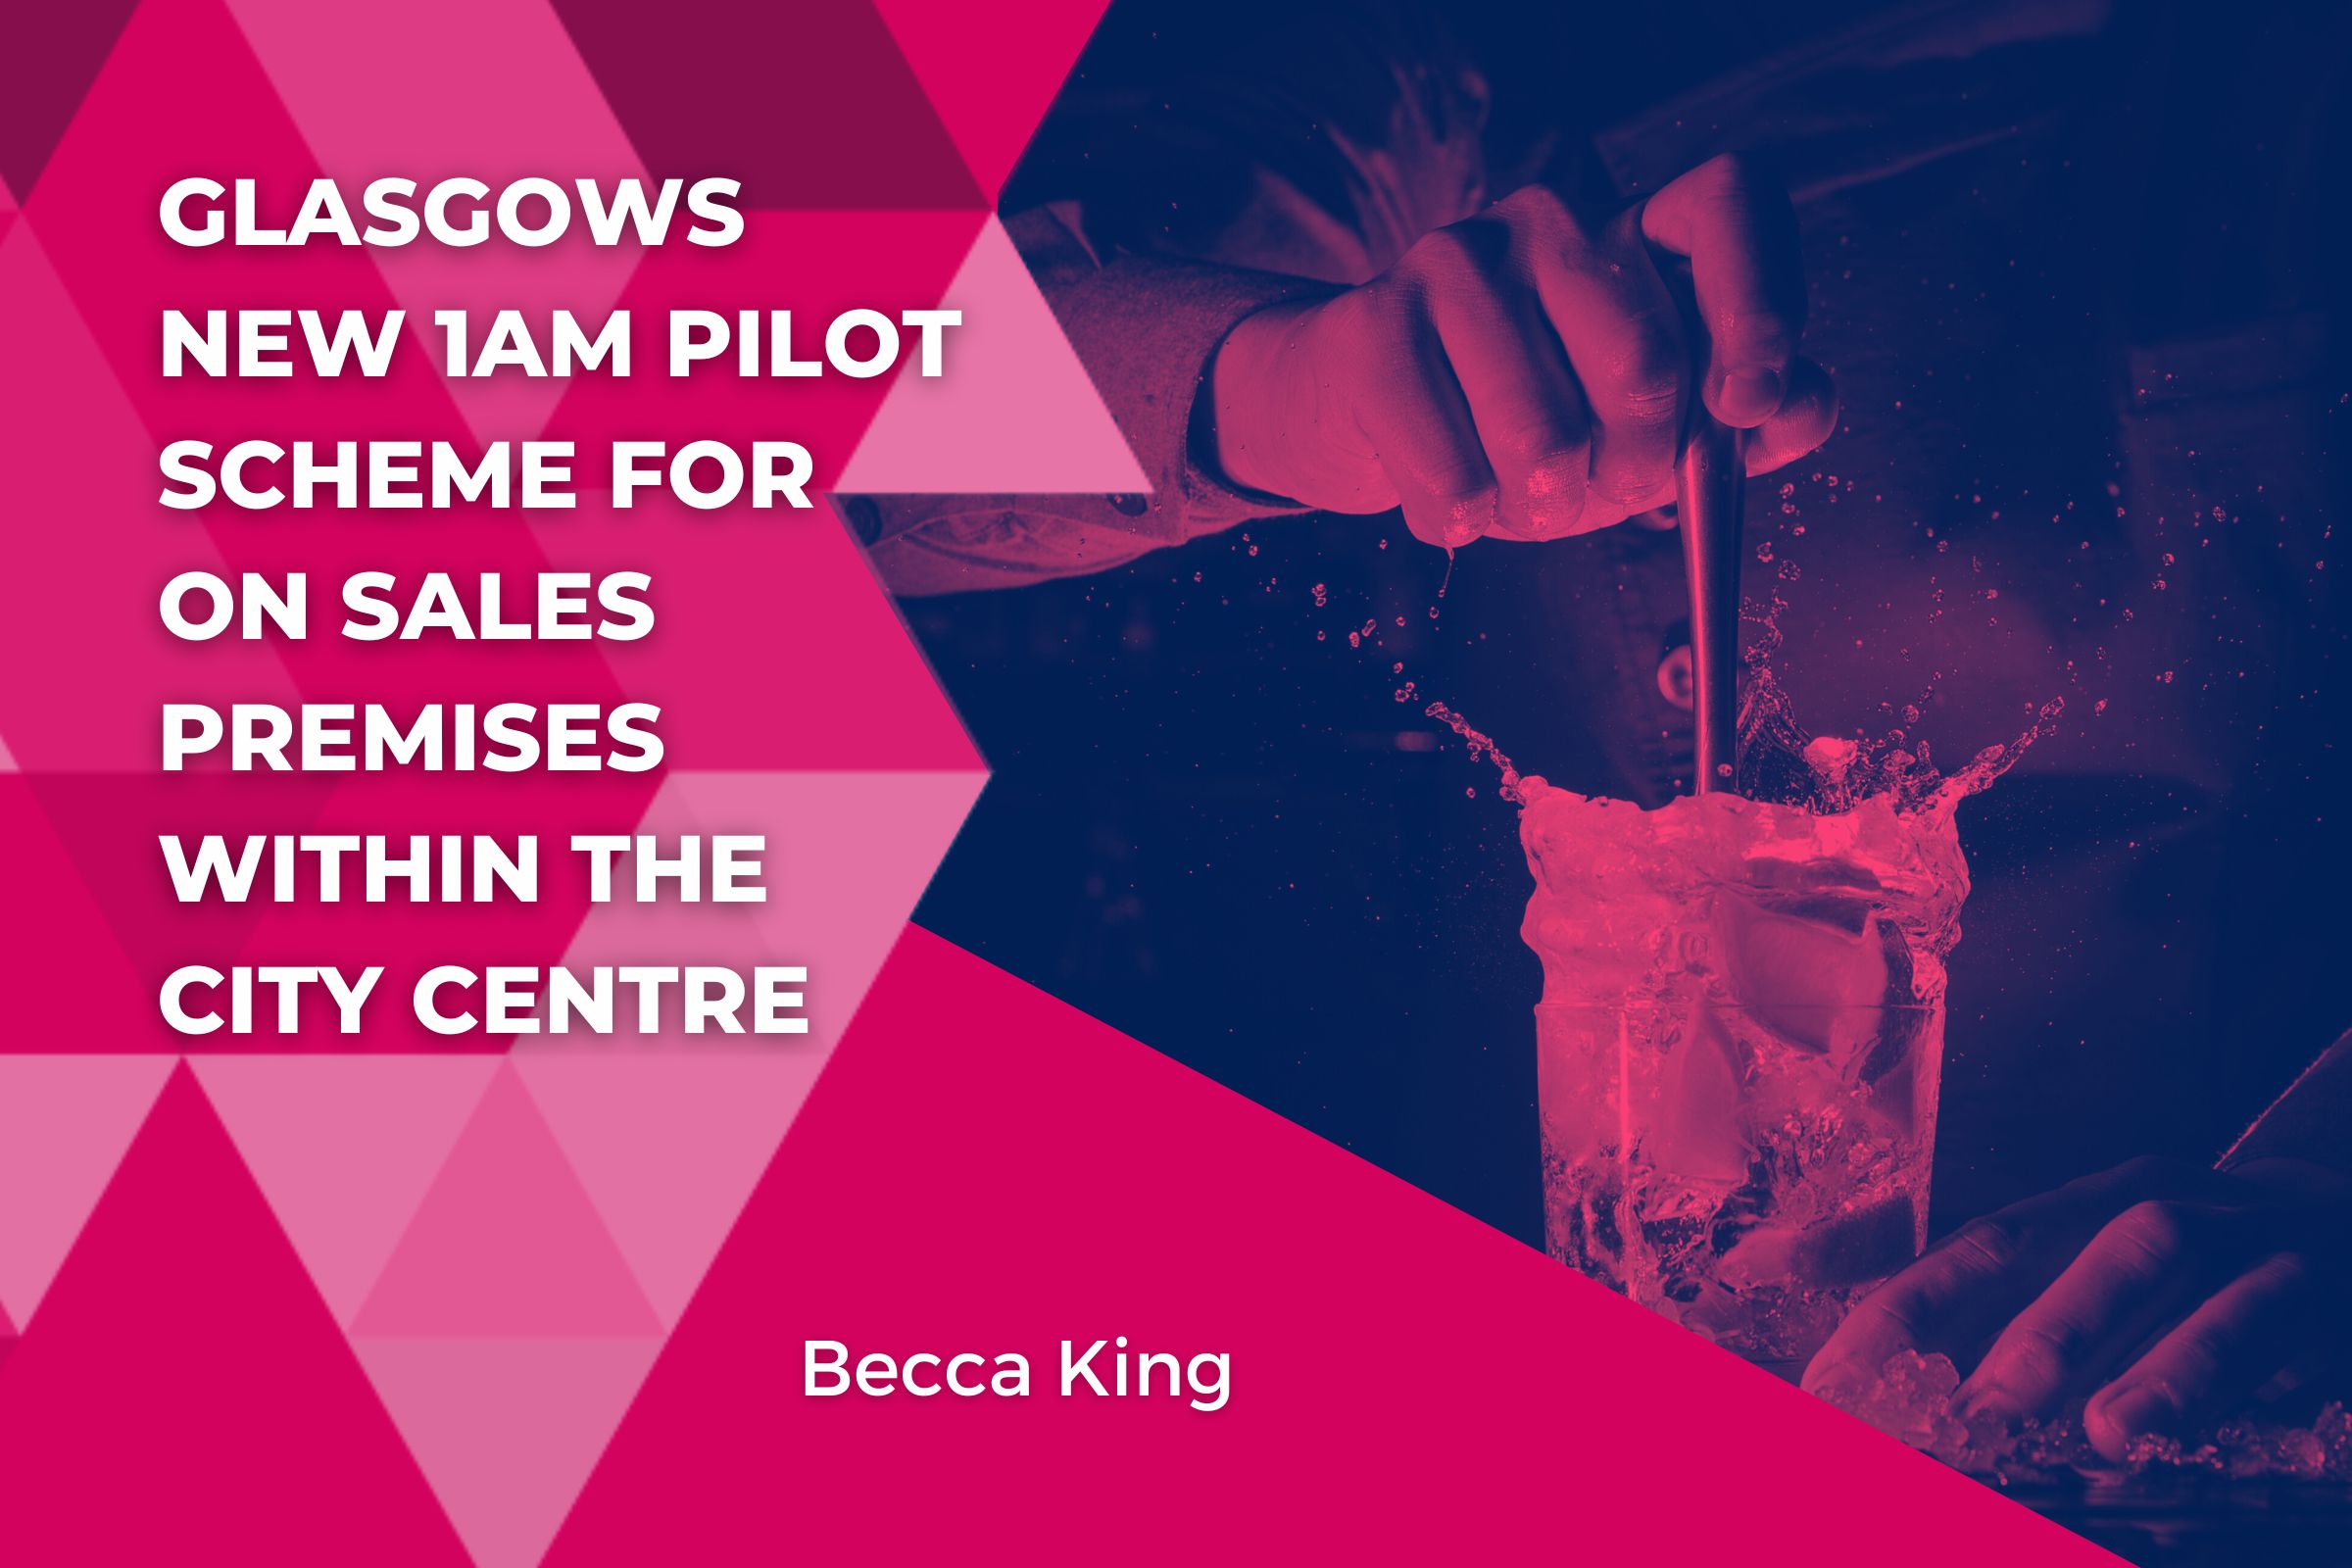 Glasgow's New 1 am Pilot Scheme for On Sales Premises within The City Centre